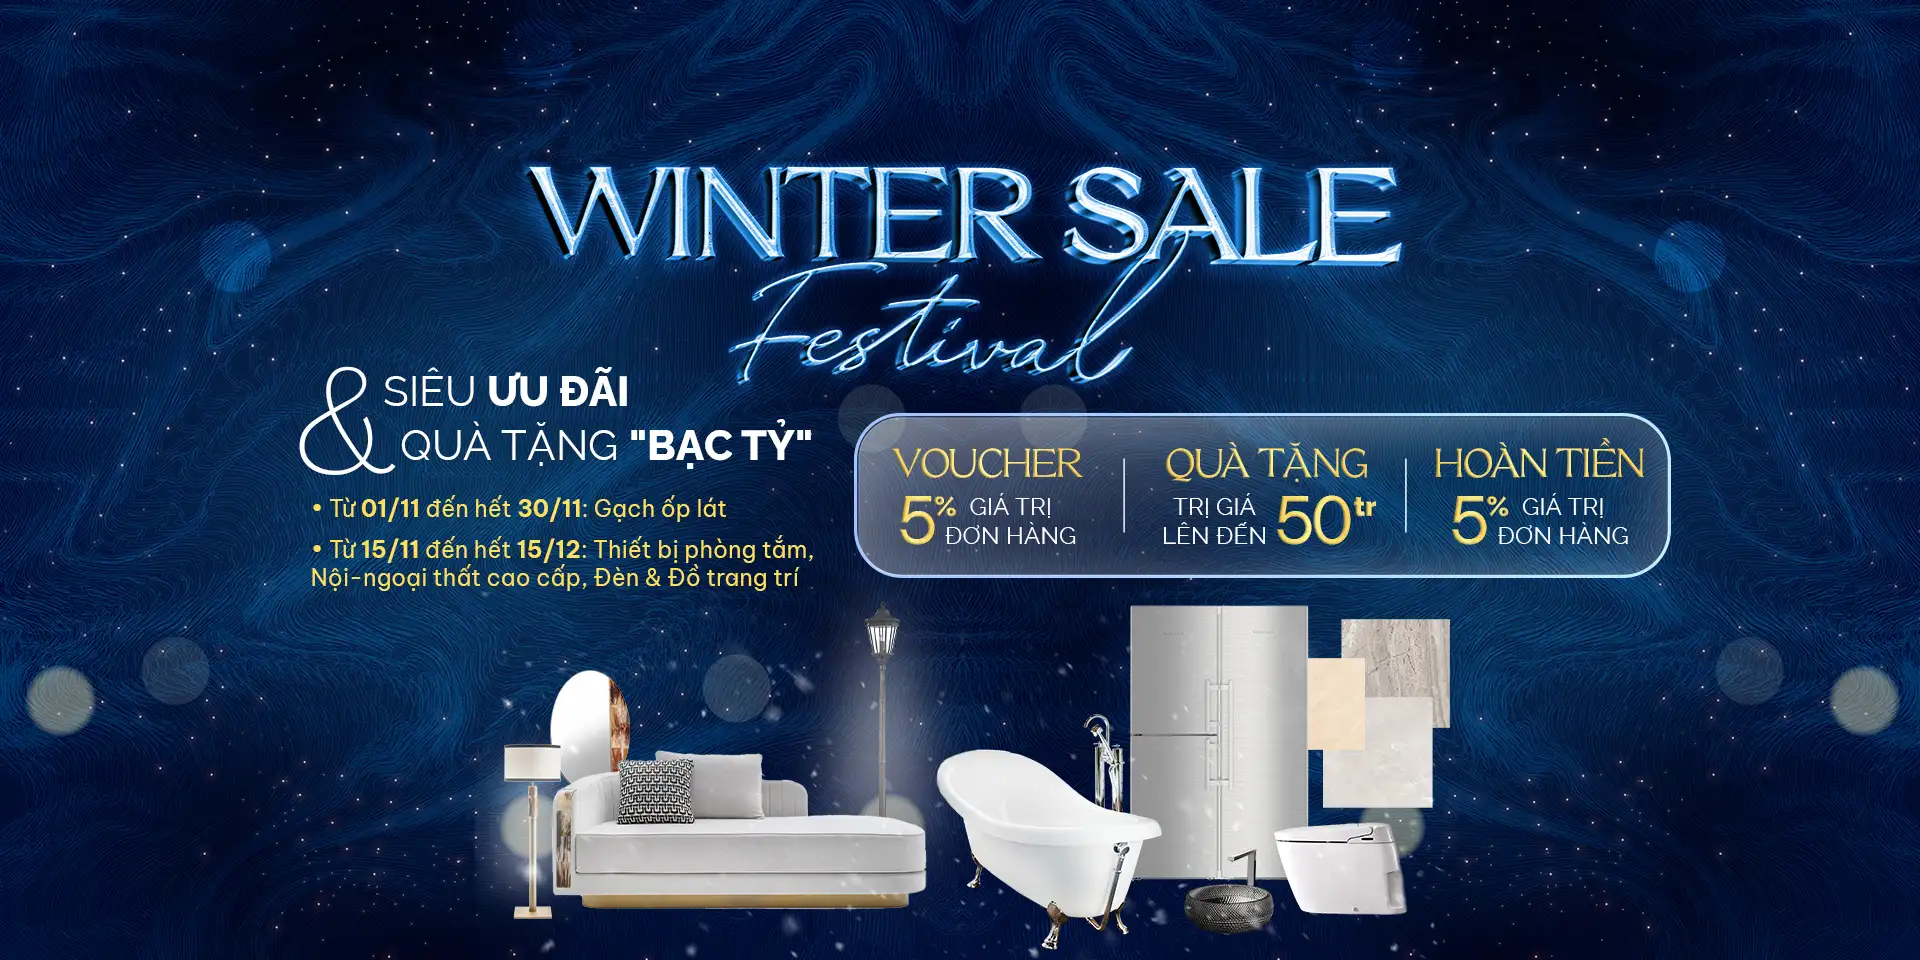 Winter Sale Festival